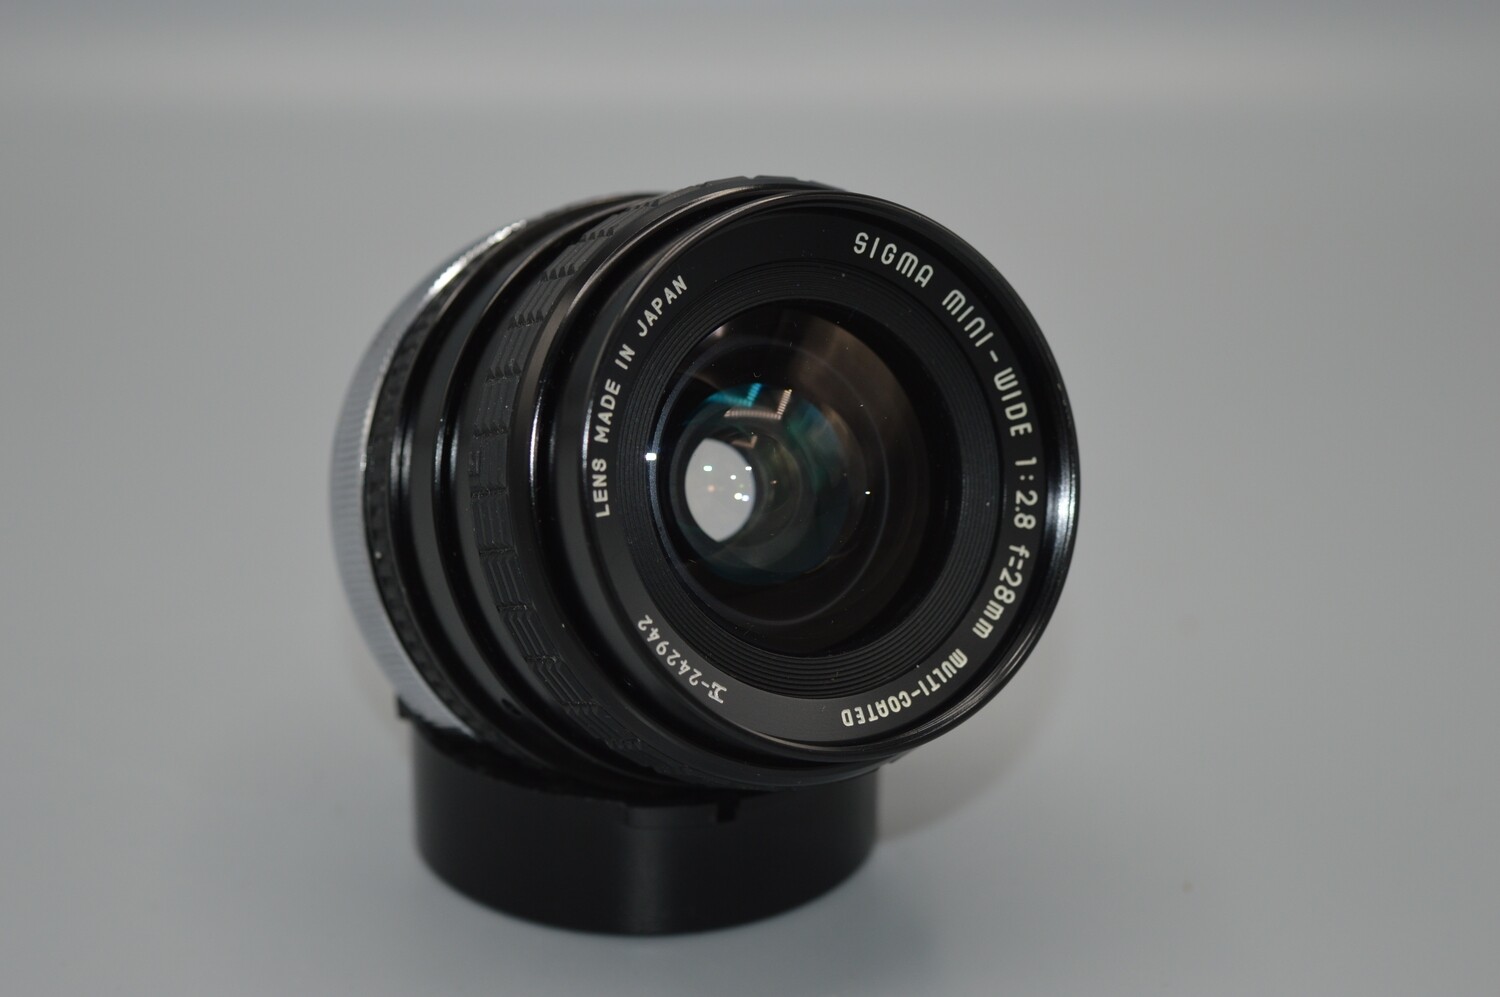 Sigma Mini-wide 1:2.8 28mm Lens